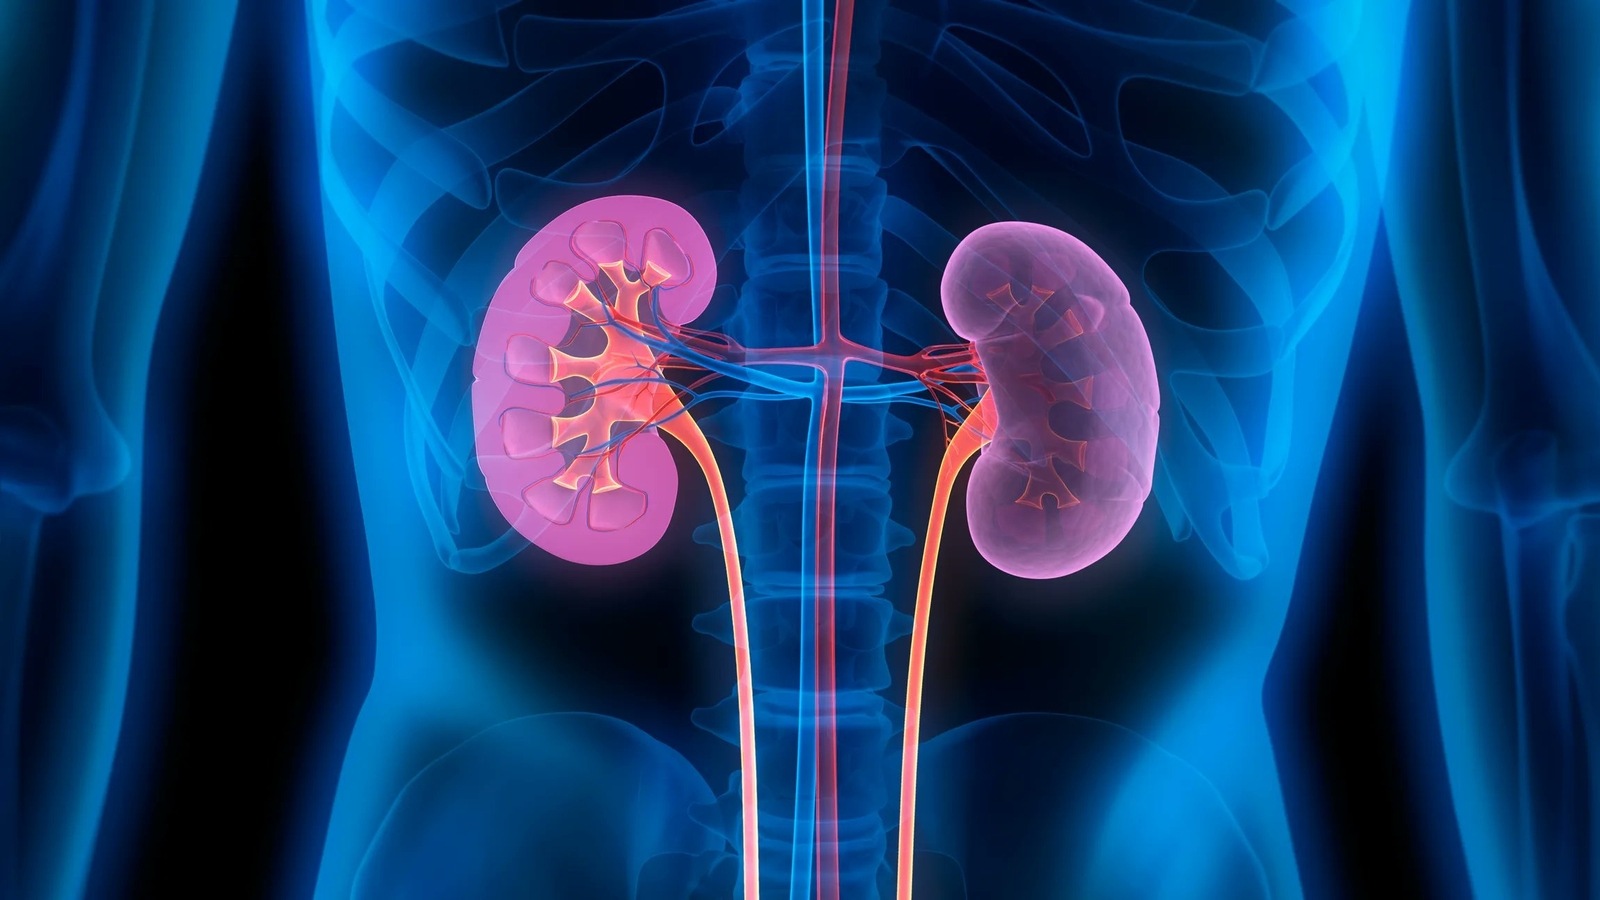 symptom-trajectories-in-patients-with-kidney-disease-study